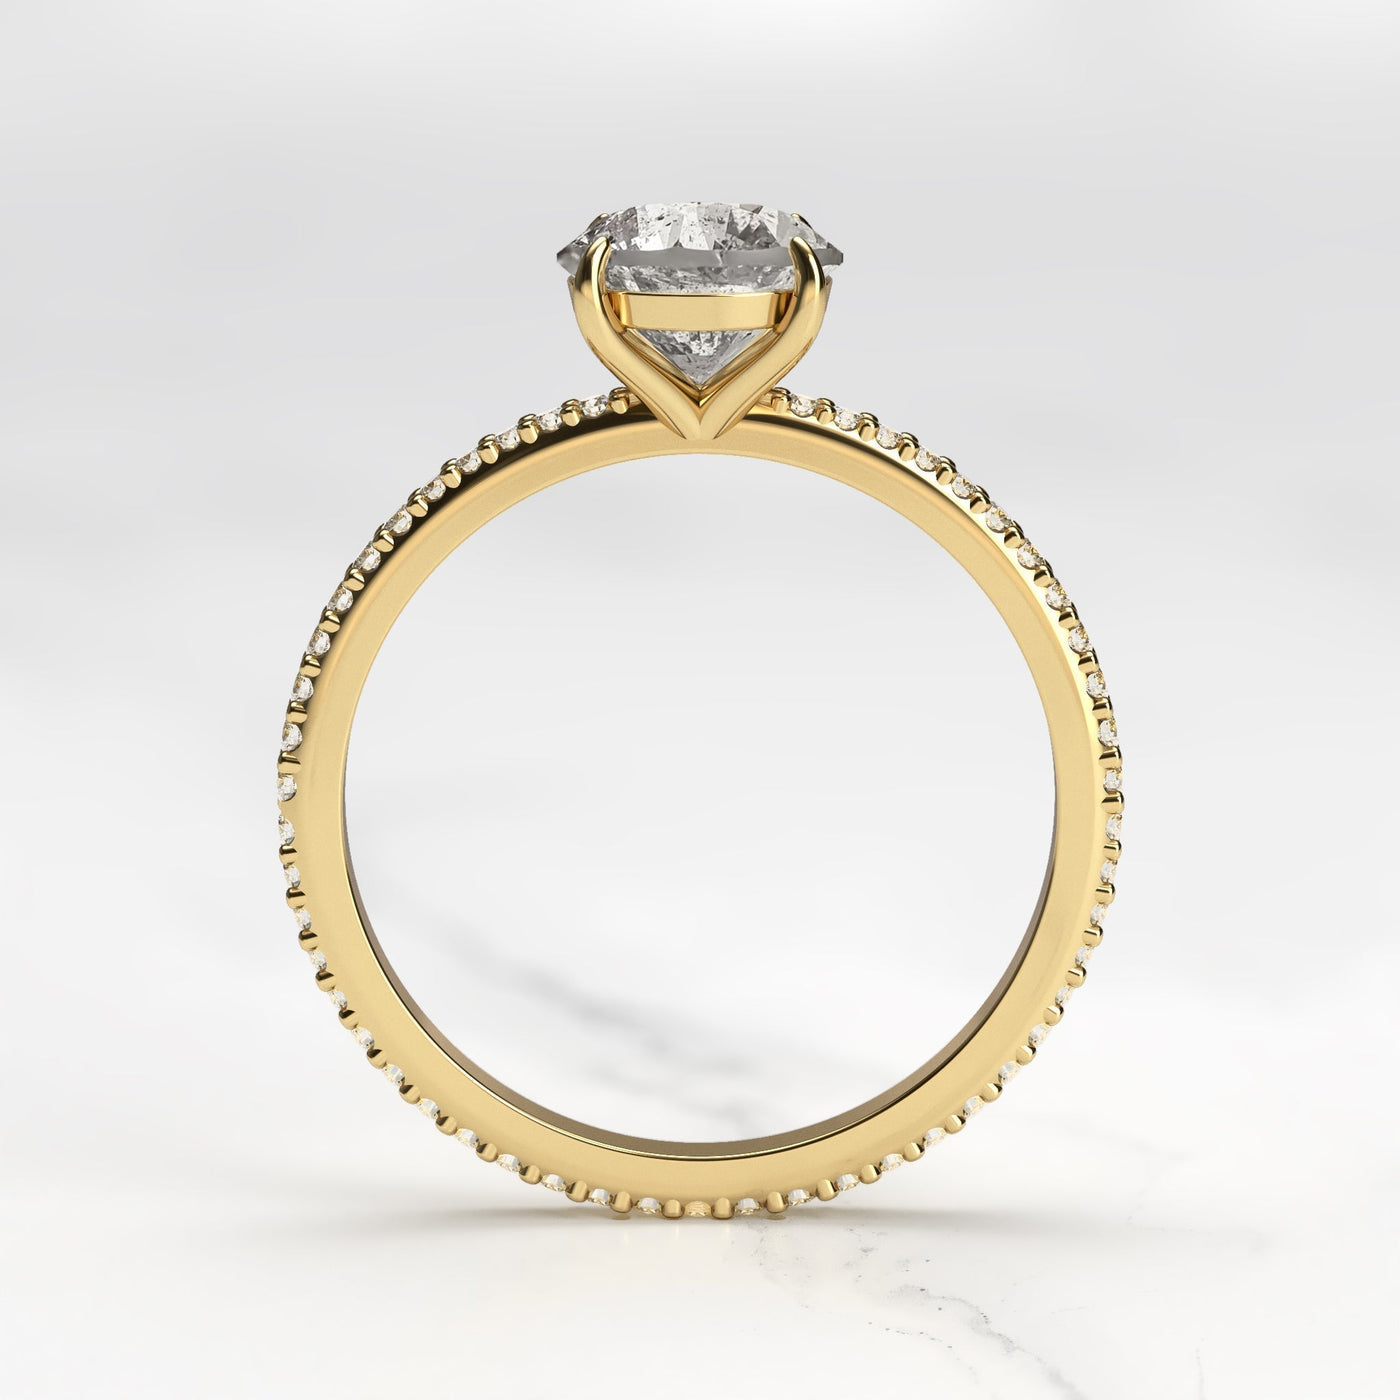 Round Full Pave Salt & Pepper Diamond, Yellow Gold Ring with Round White Diamonds